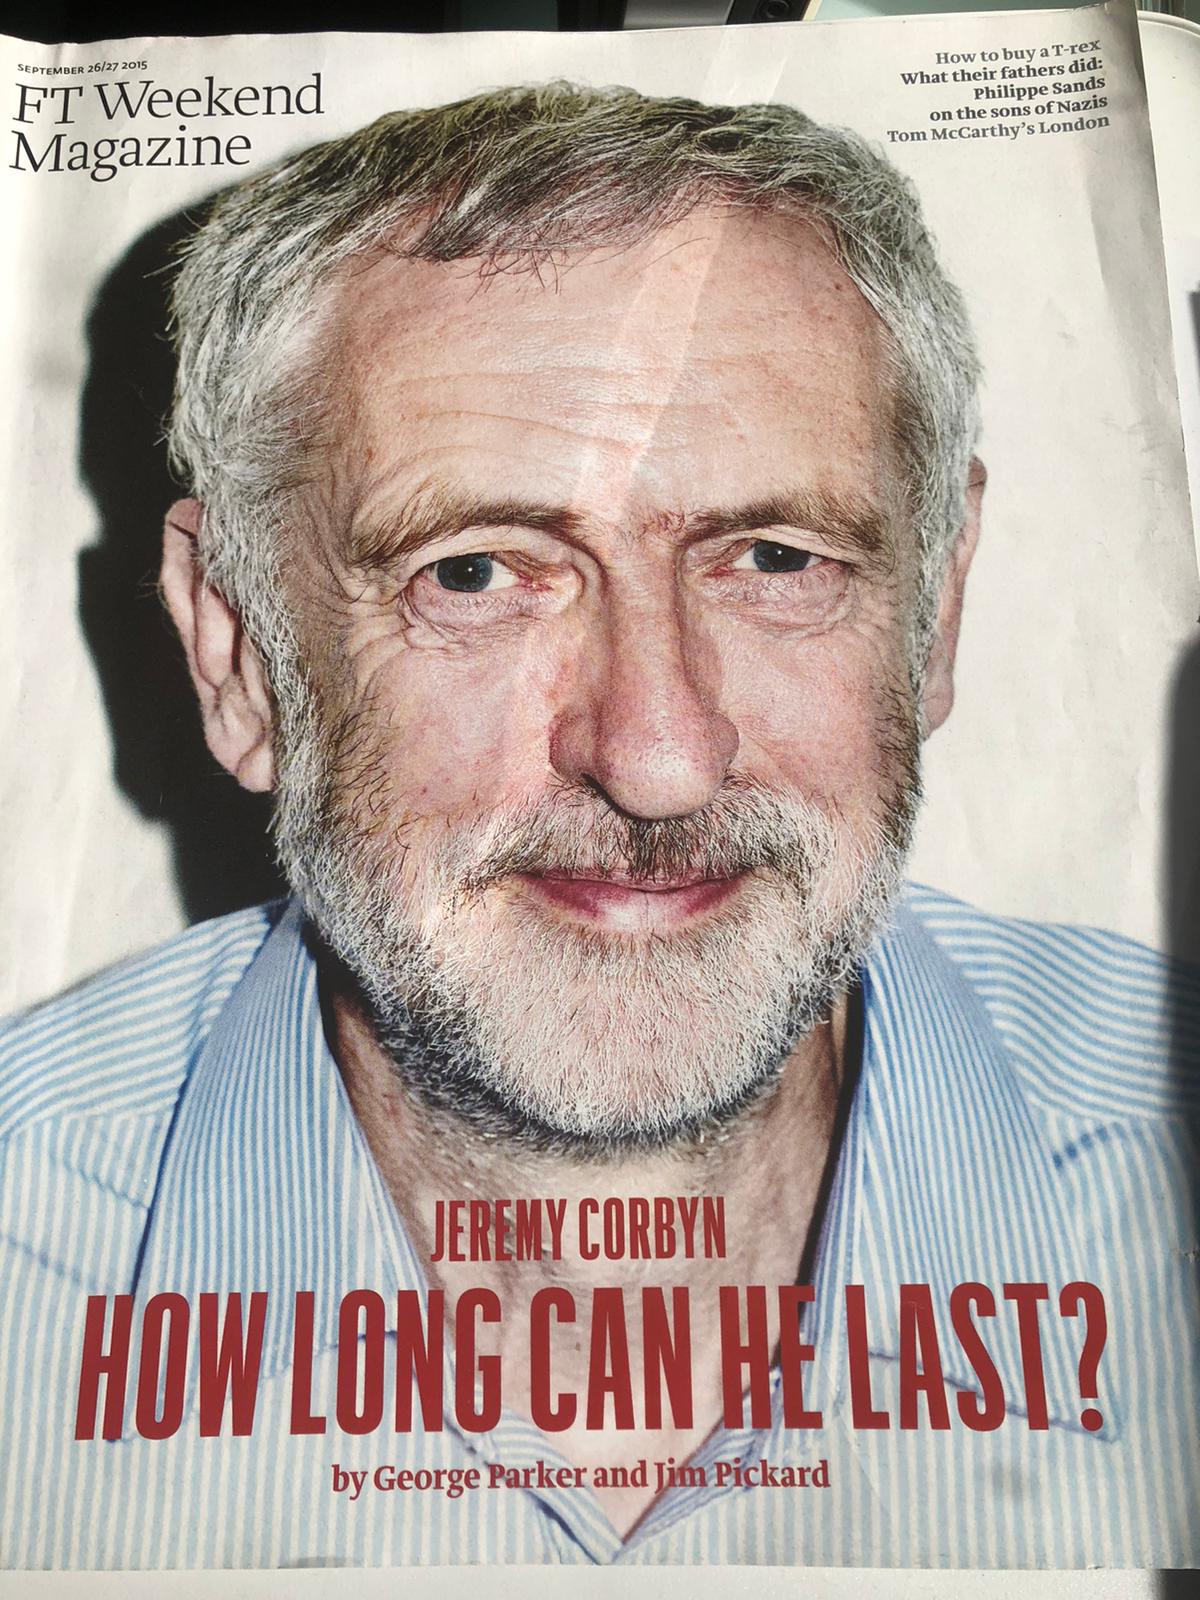 Jeremy Corbyn Financial Times Image fair use